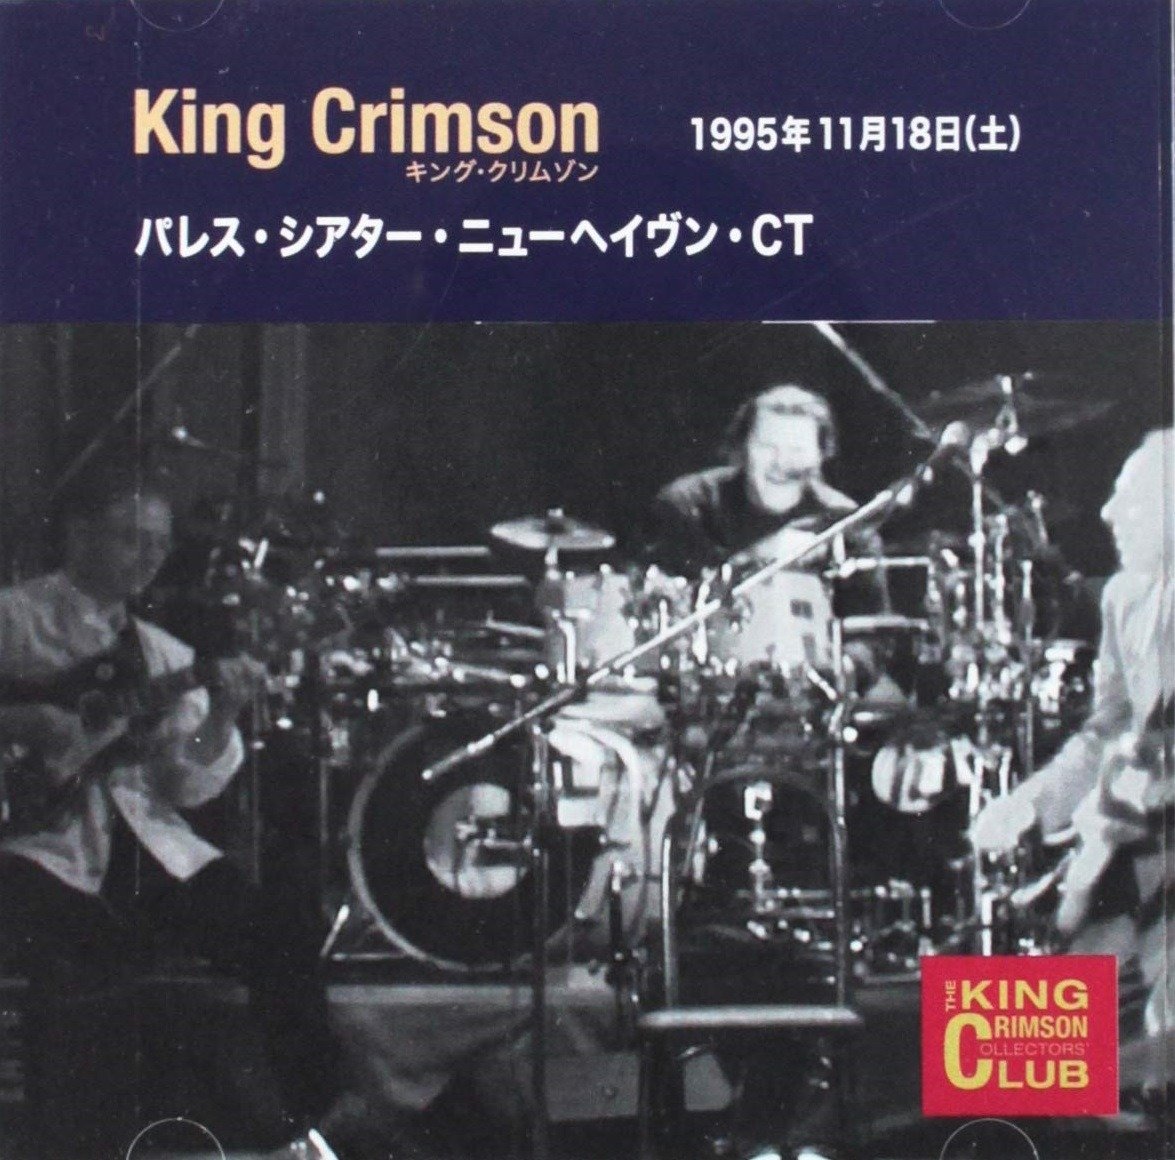 CD Shop - KING CRIMSON 1995-11-18 PALACE THEATRE. NEW HAVEN